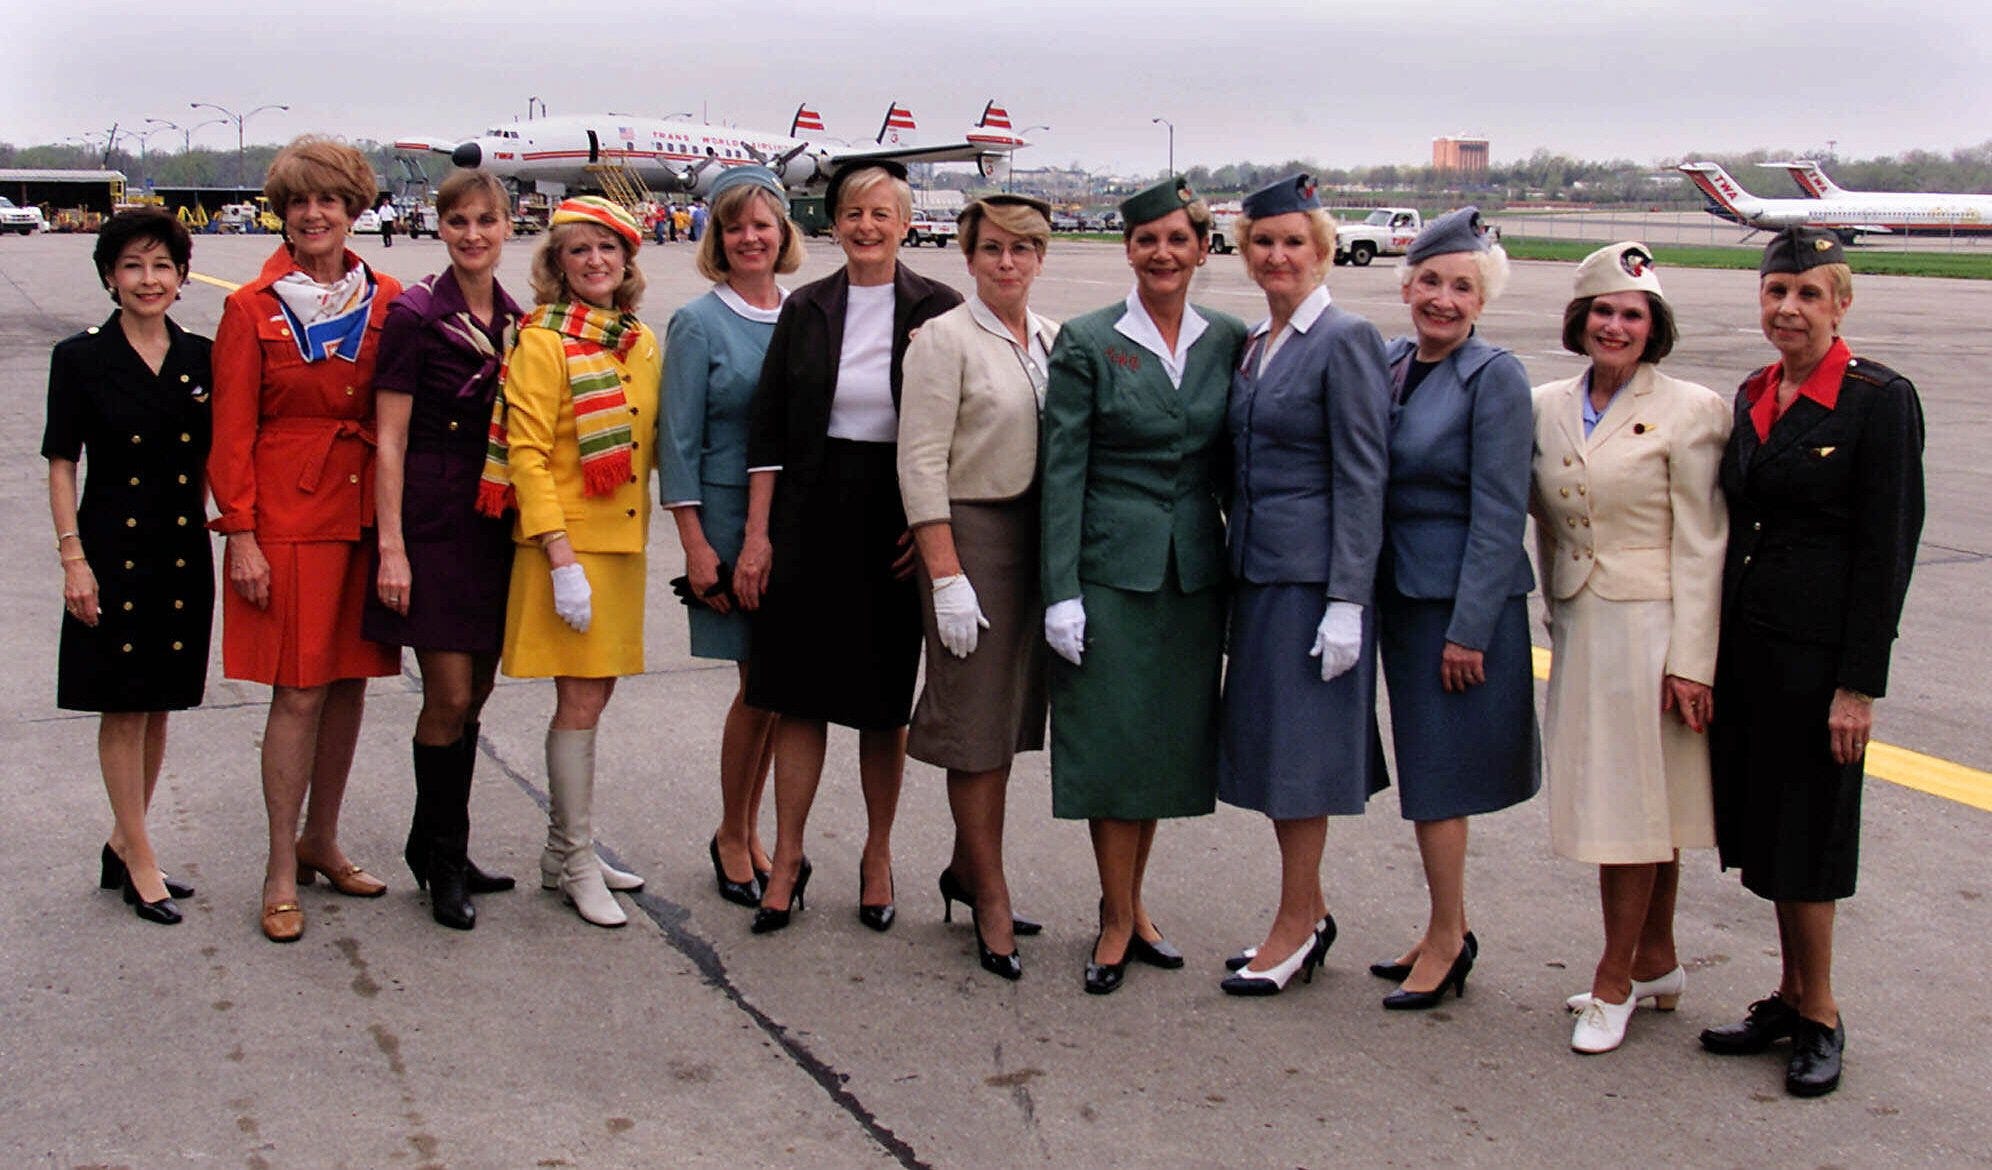 Flight attendant uniforms through the years